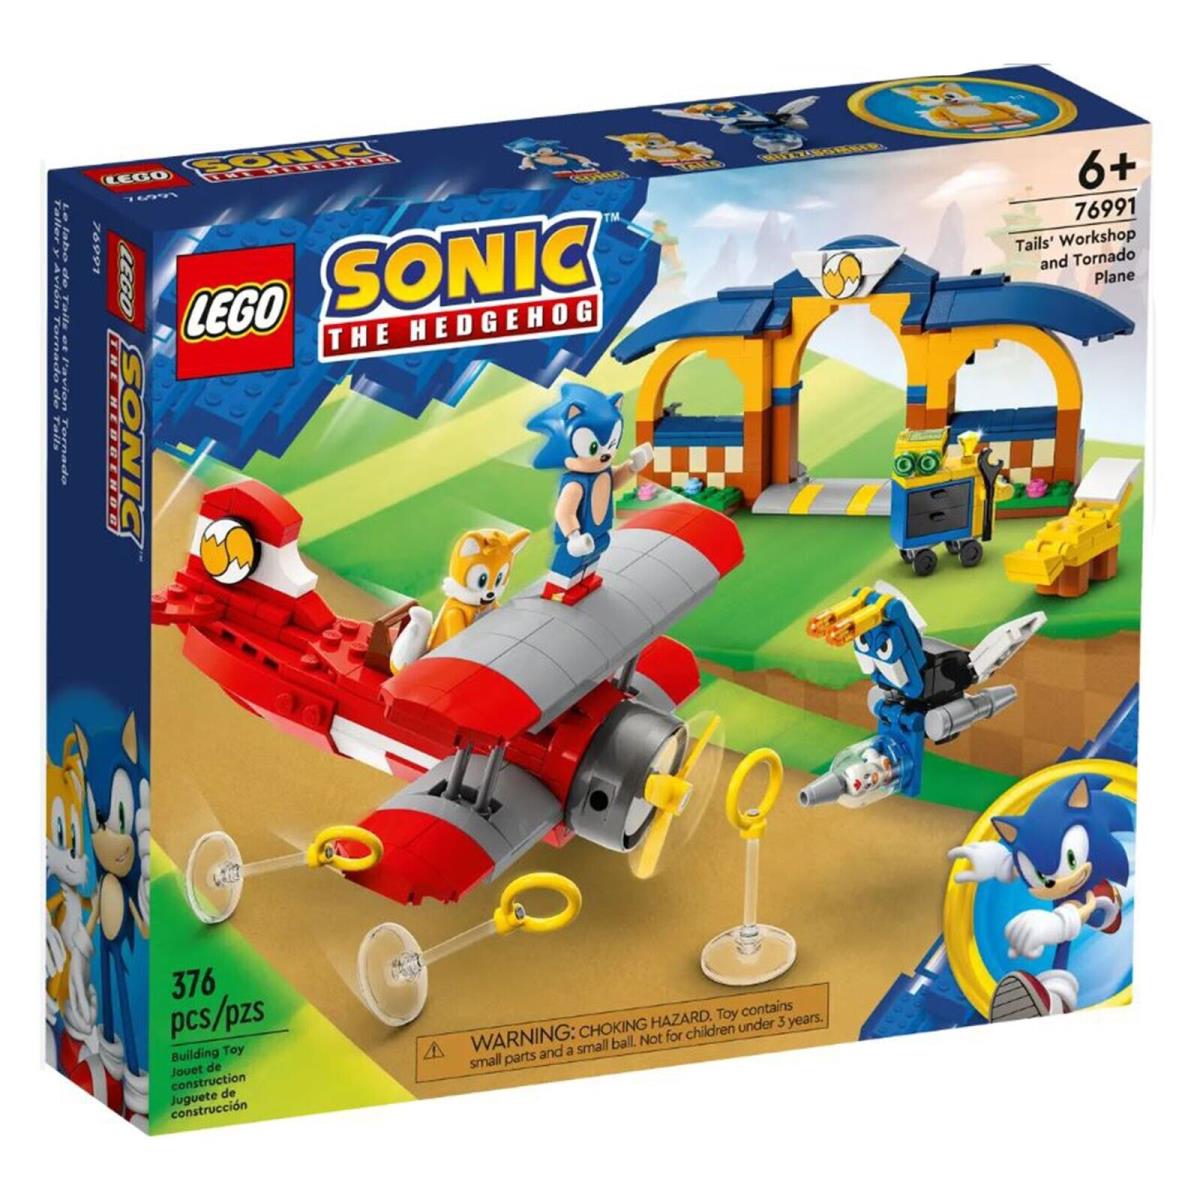 Lego Sonic The Hedgehog Tails` Workshop and Tornado Plane Building Set 76991